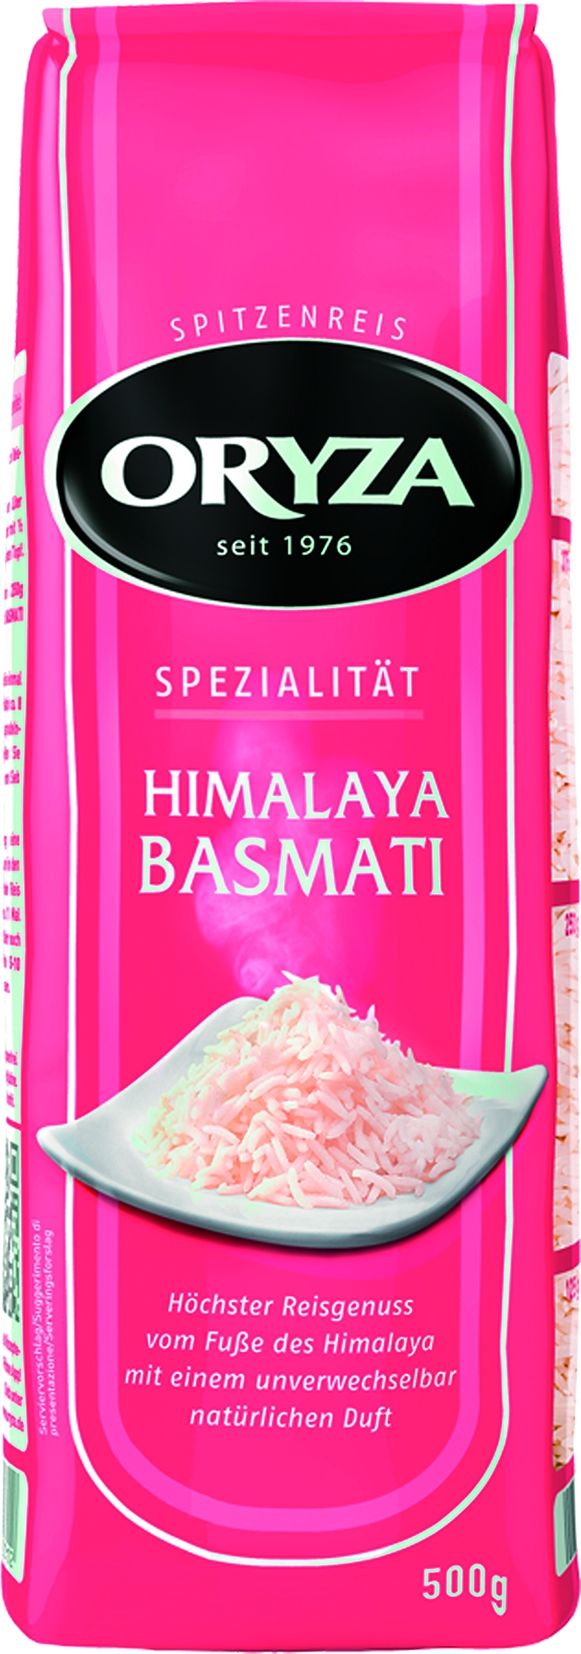 Himalaya-Basmati Reis   